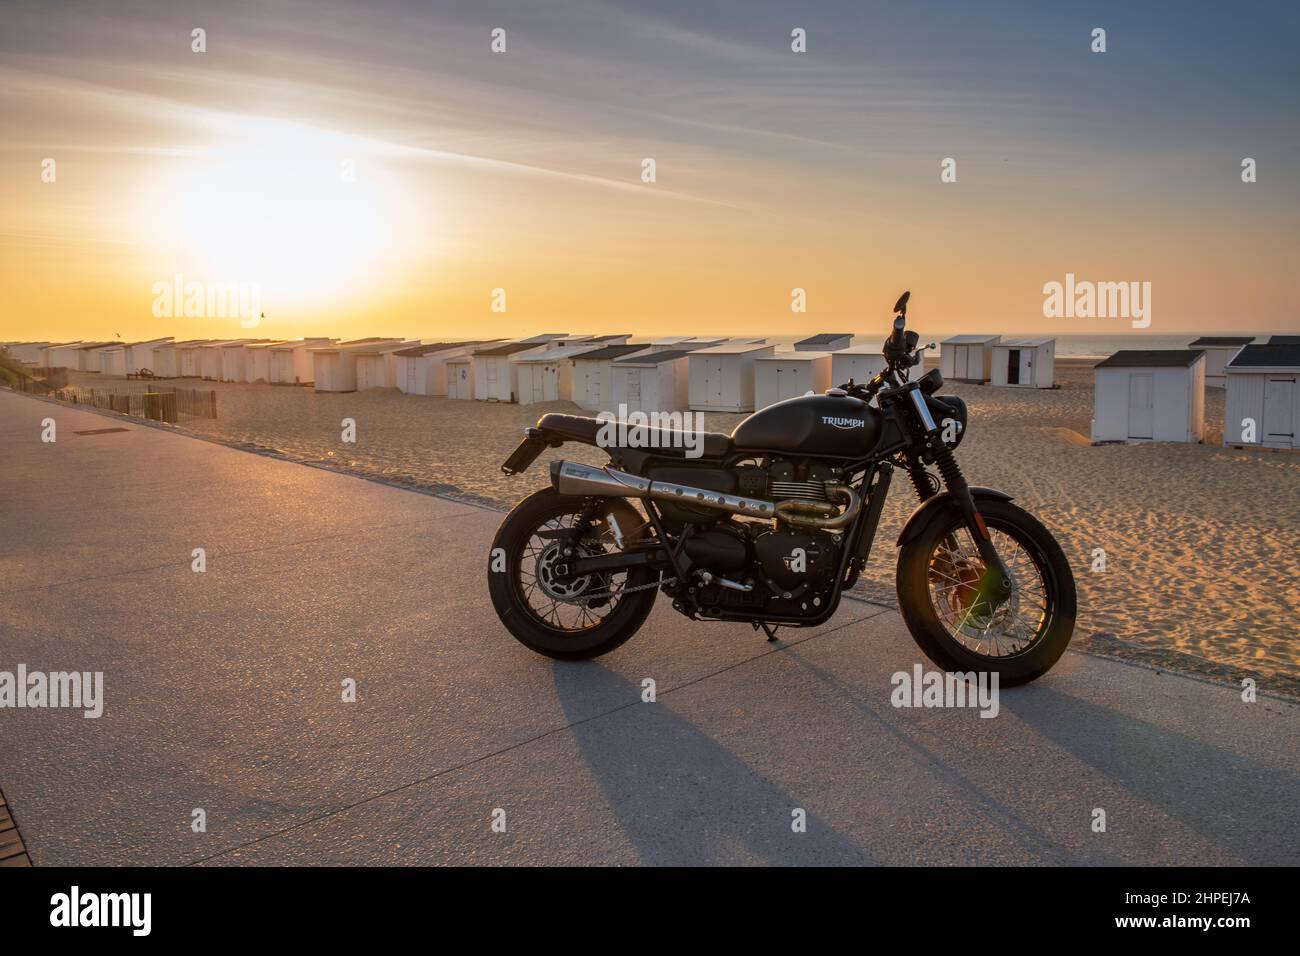 Triumph motorbike at the beach in Calais, France Stock Photo